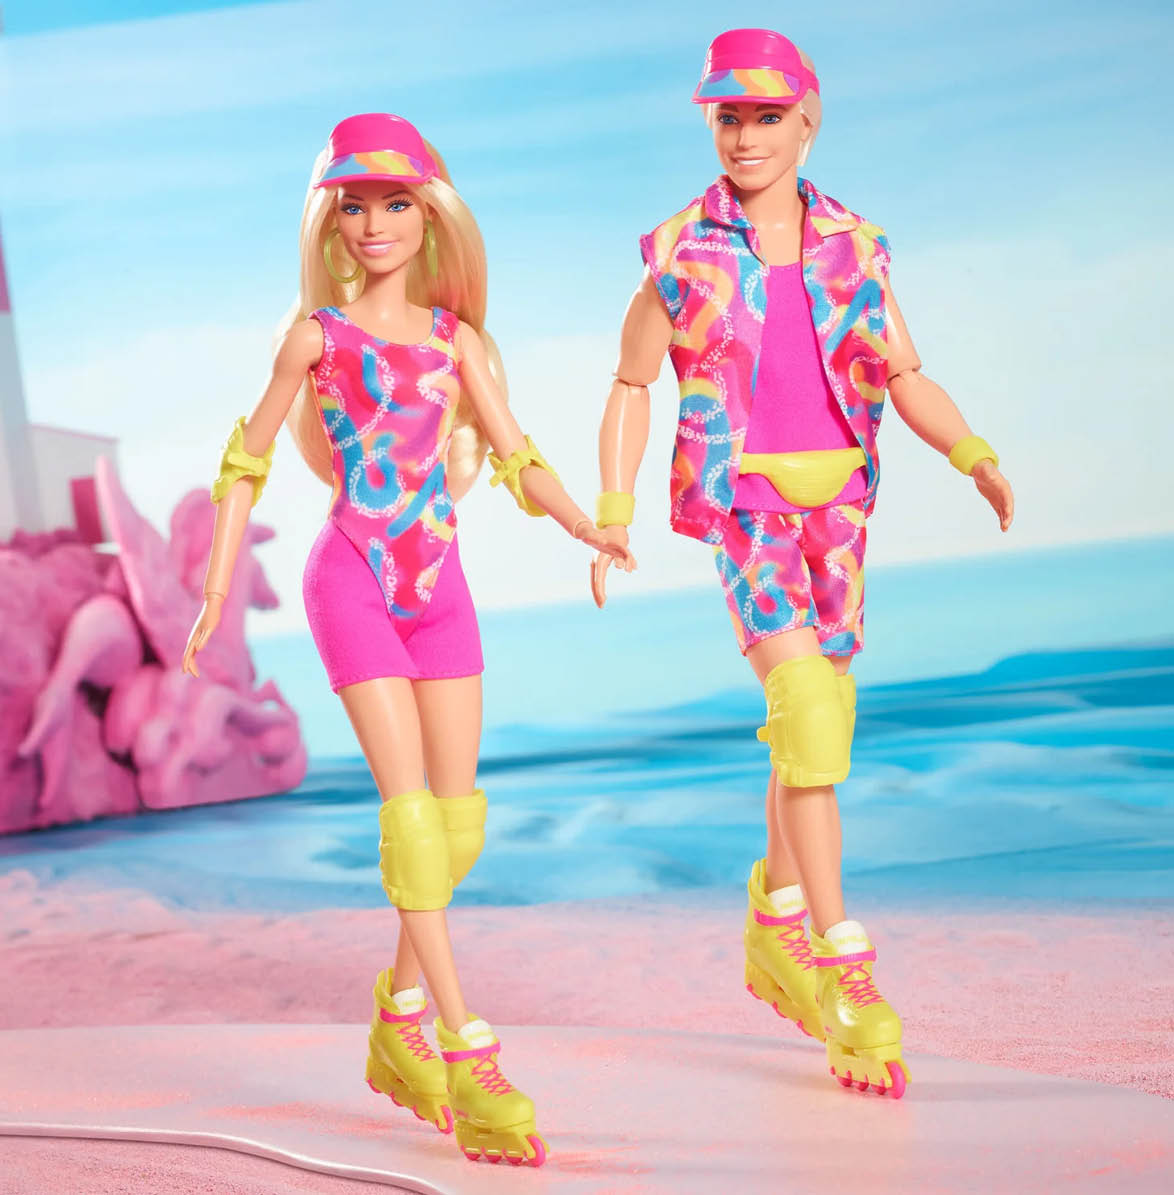 Barbie The Movie Barbie and Ken Dolls in skates